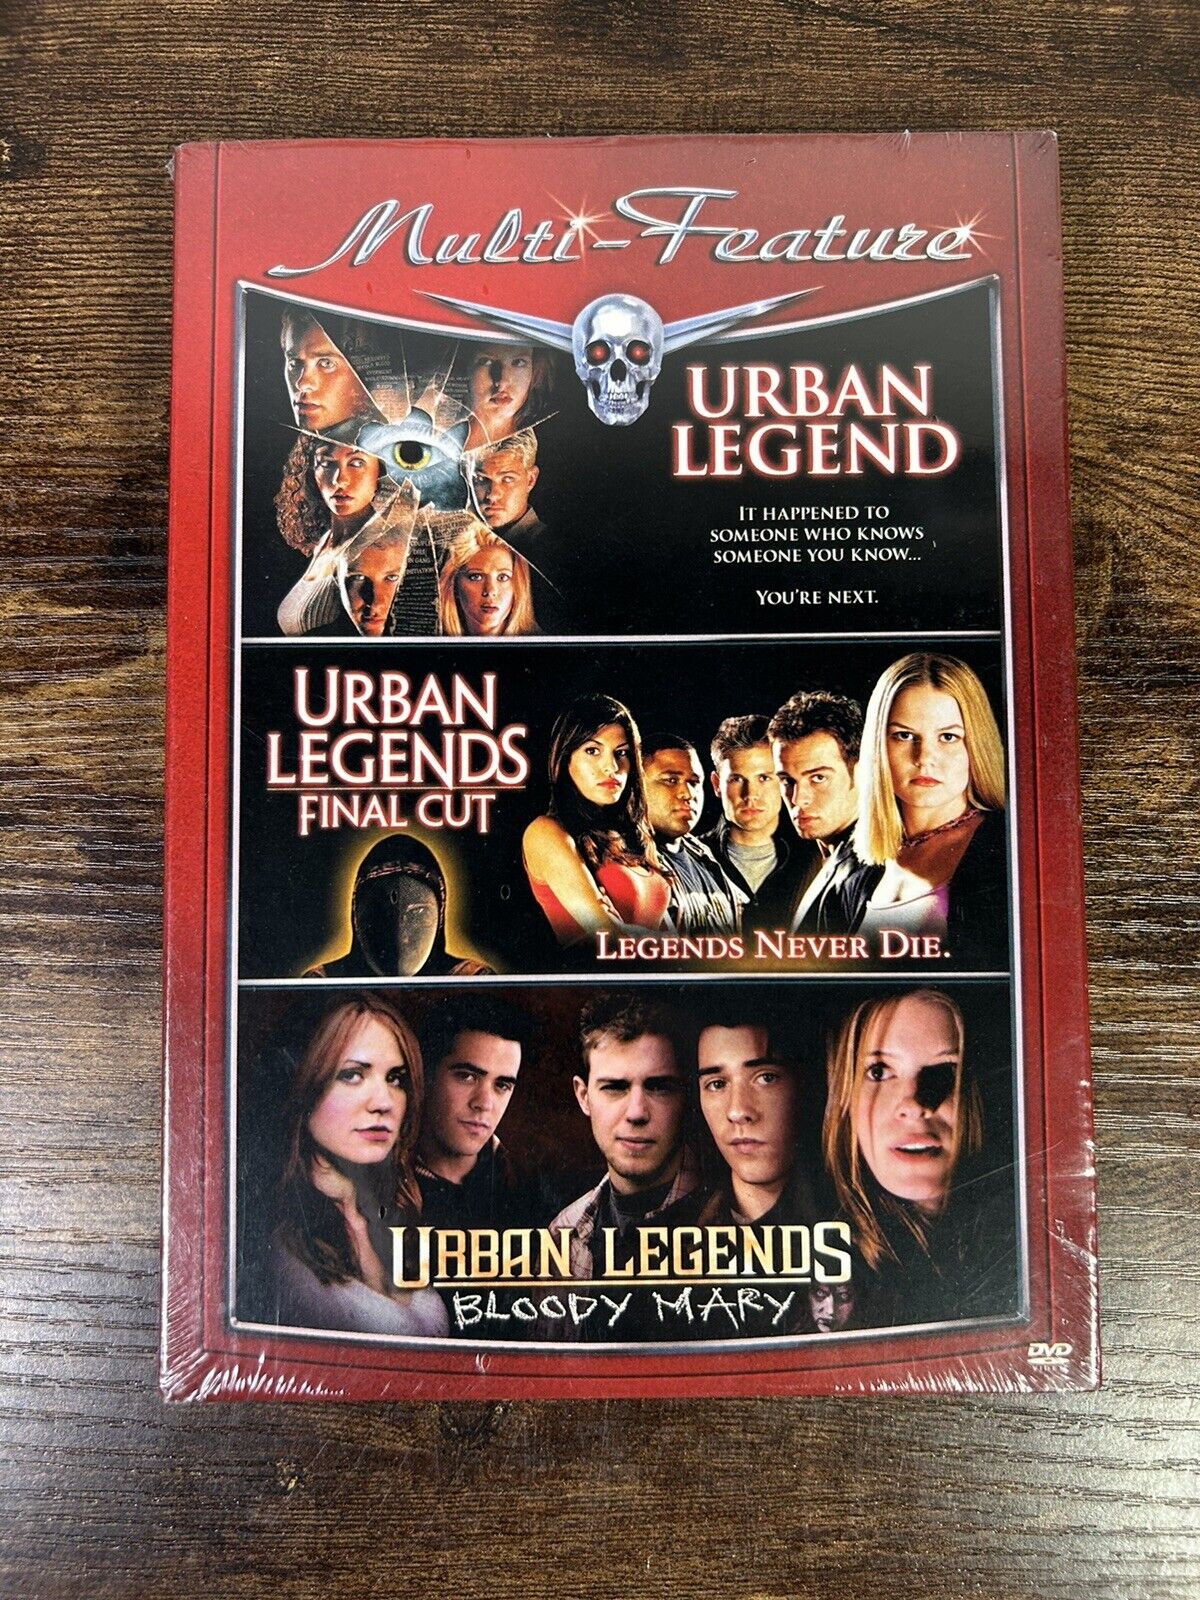 Urban Legend 1 2 3 Feature DVD Set Cut Bloody Mary Legends for sale online | eBay